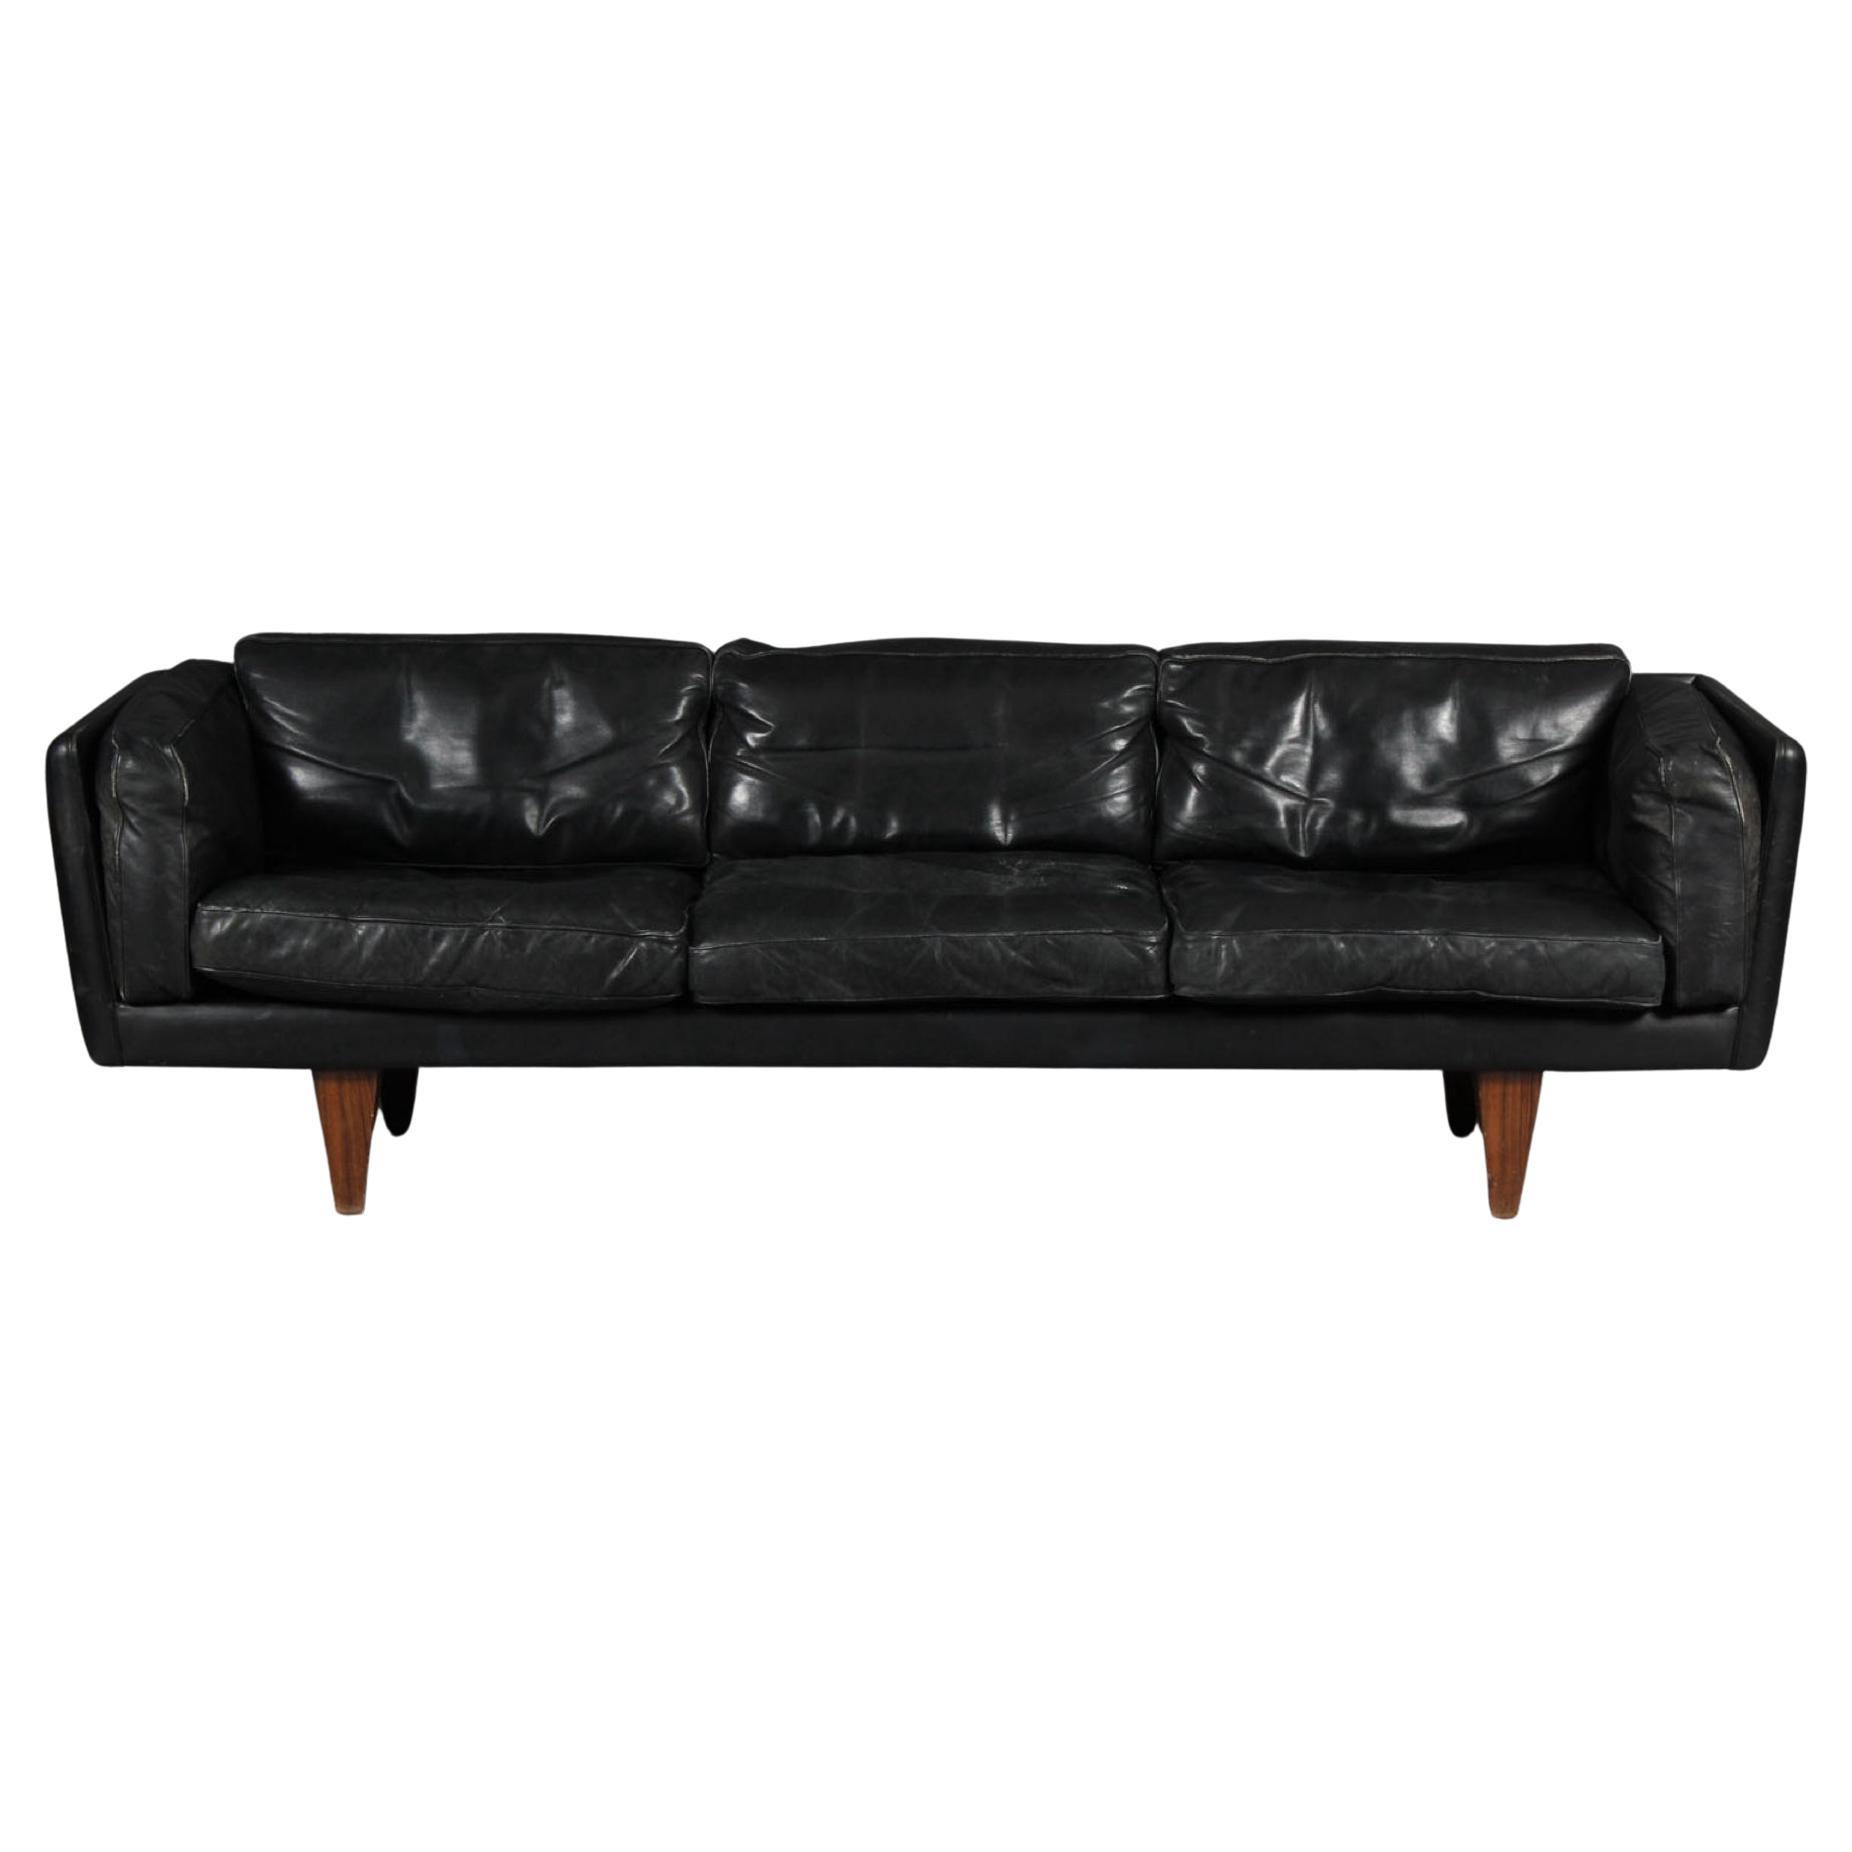 Illum Wikkelsø Dreisitziges Sofa aus schwarzem Leder und Palisanderholz